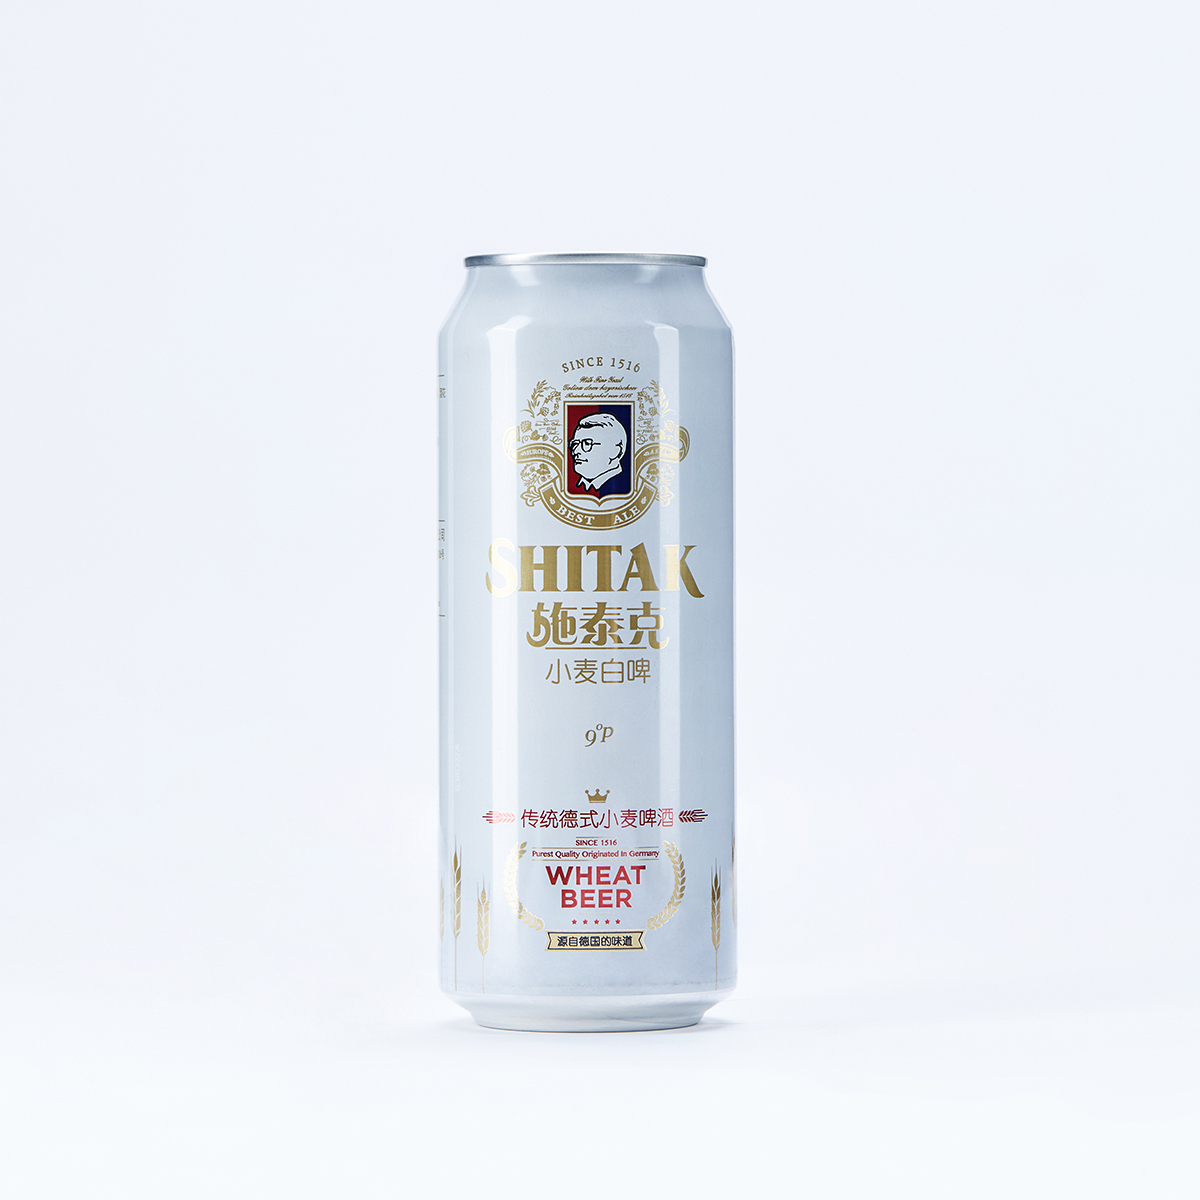 施泰克小麦白啤·500ml*12 shitak·wheat beer·pop